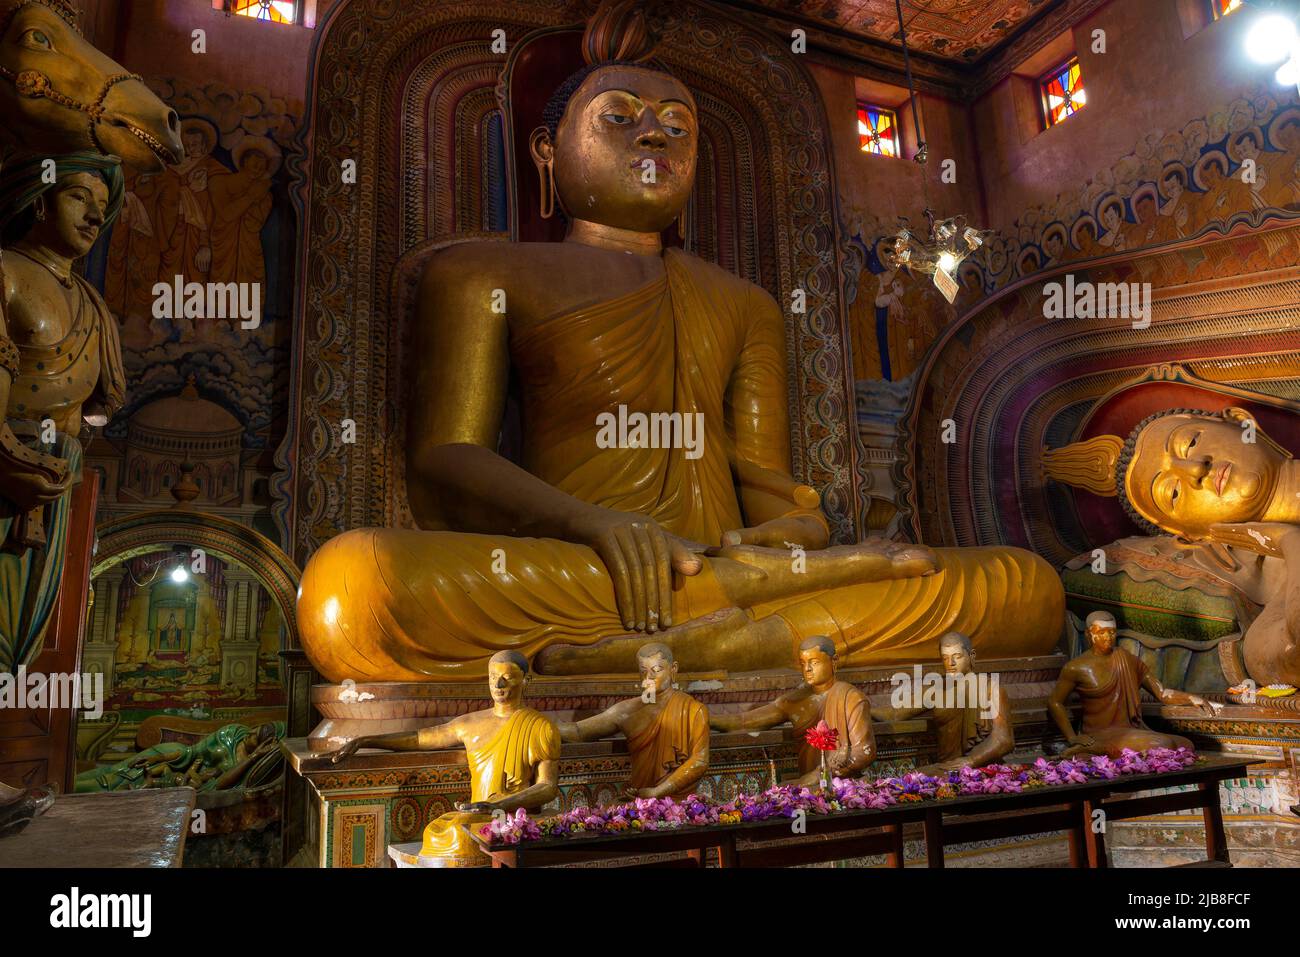 DICKWELLA, SRI LANKA - FEBRUARY 17, 2020: Ancient sculpture of a seated Buddha in the Wewrukannala Buduraja Maha Viharaya Buddhist Temple Stock Photo